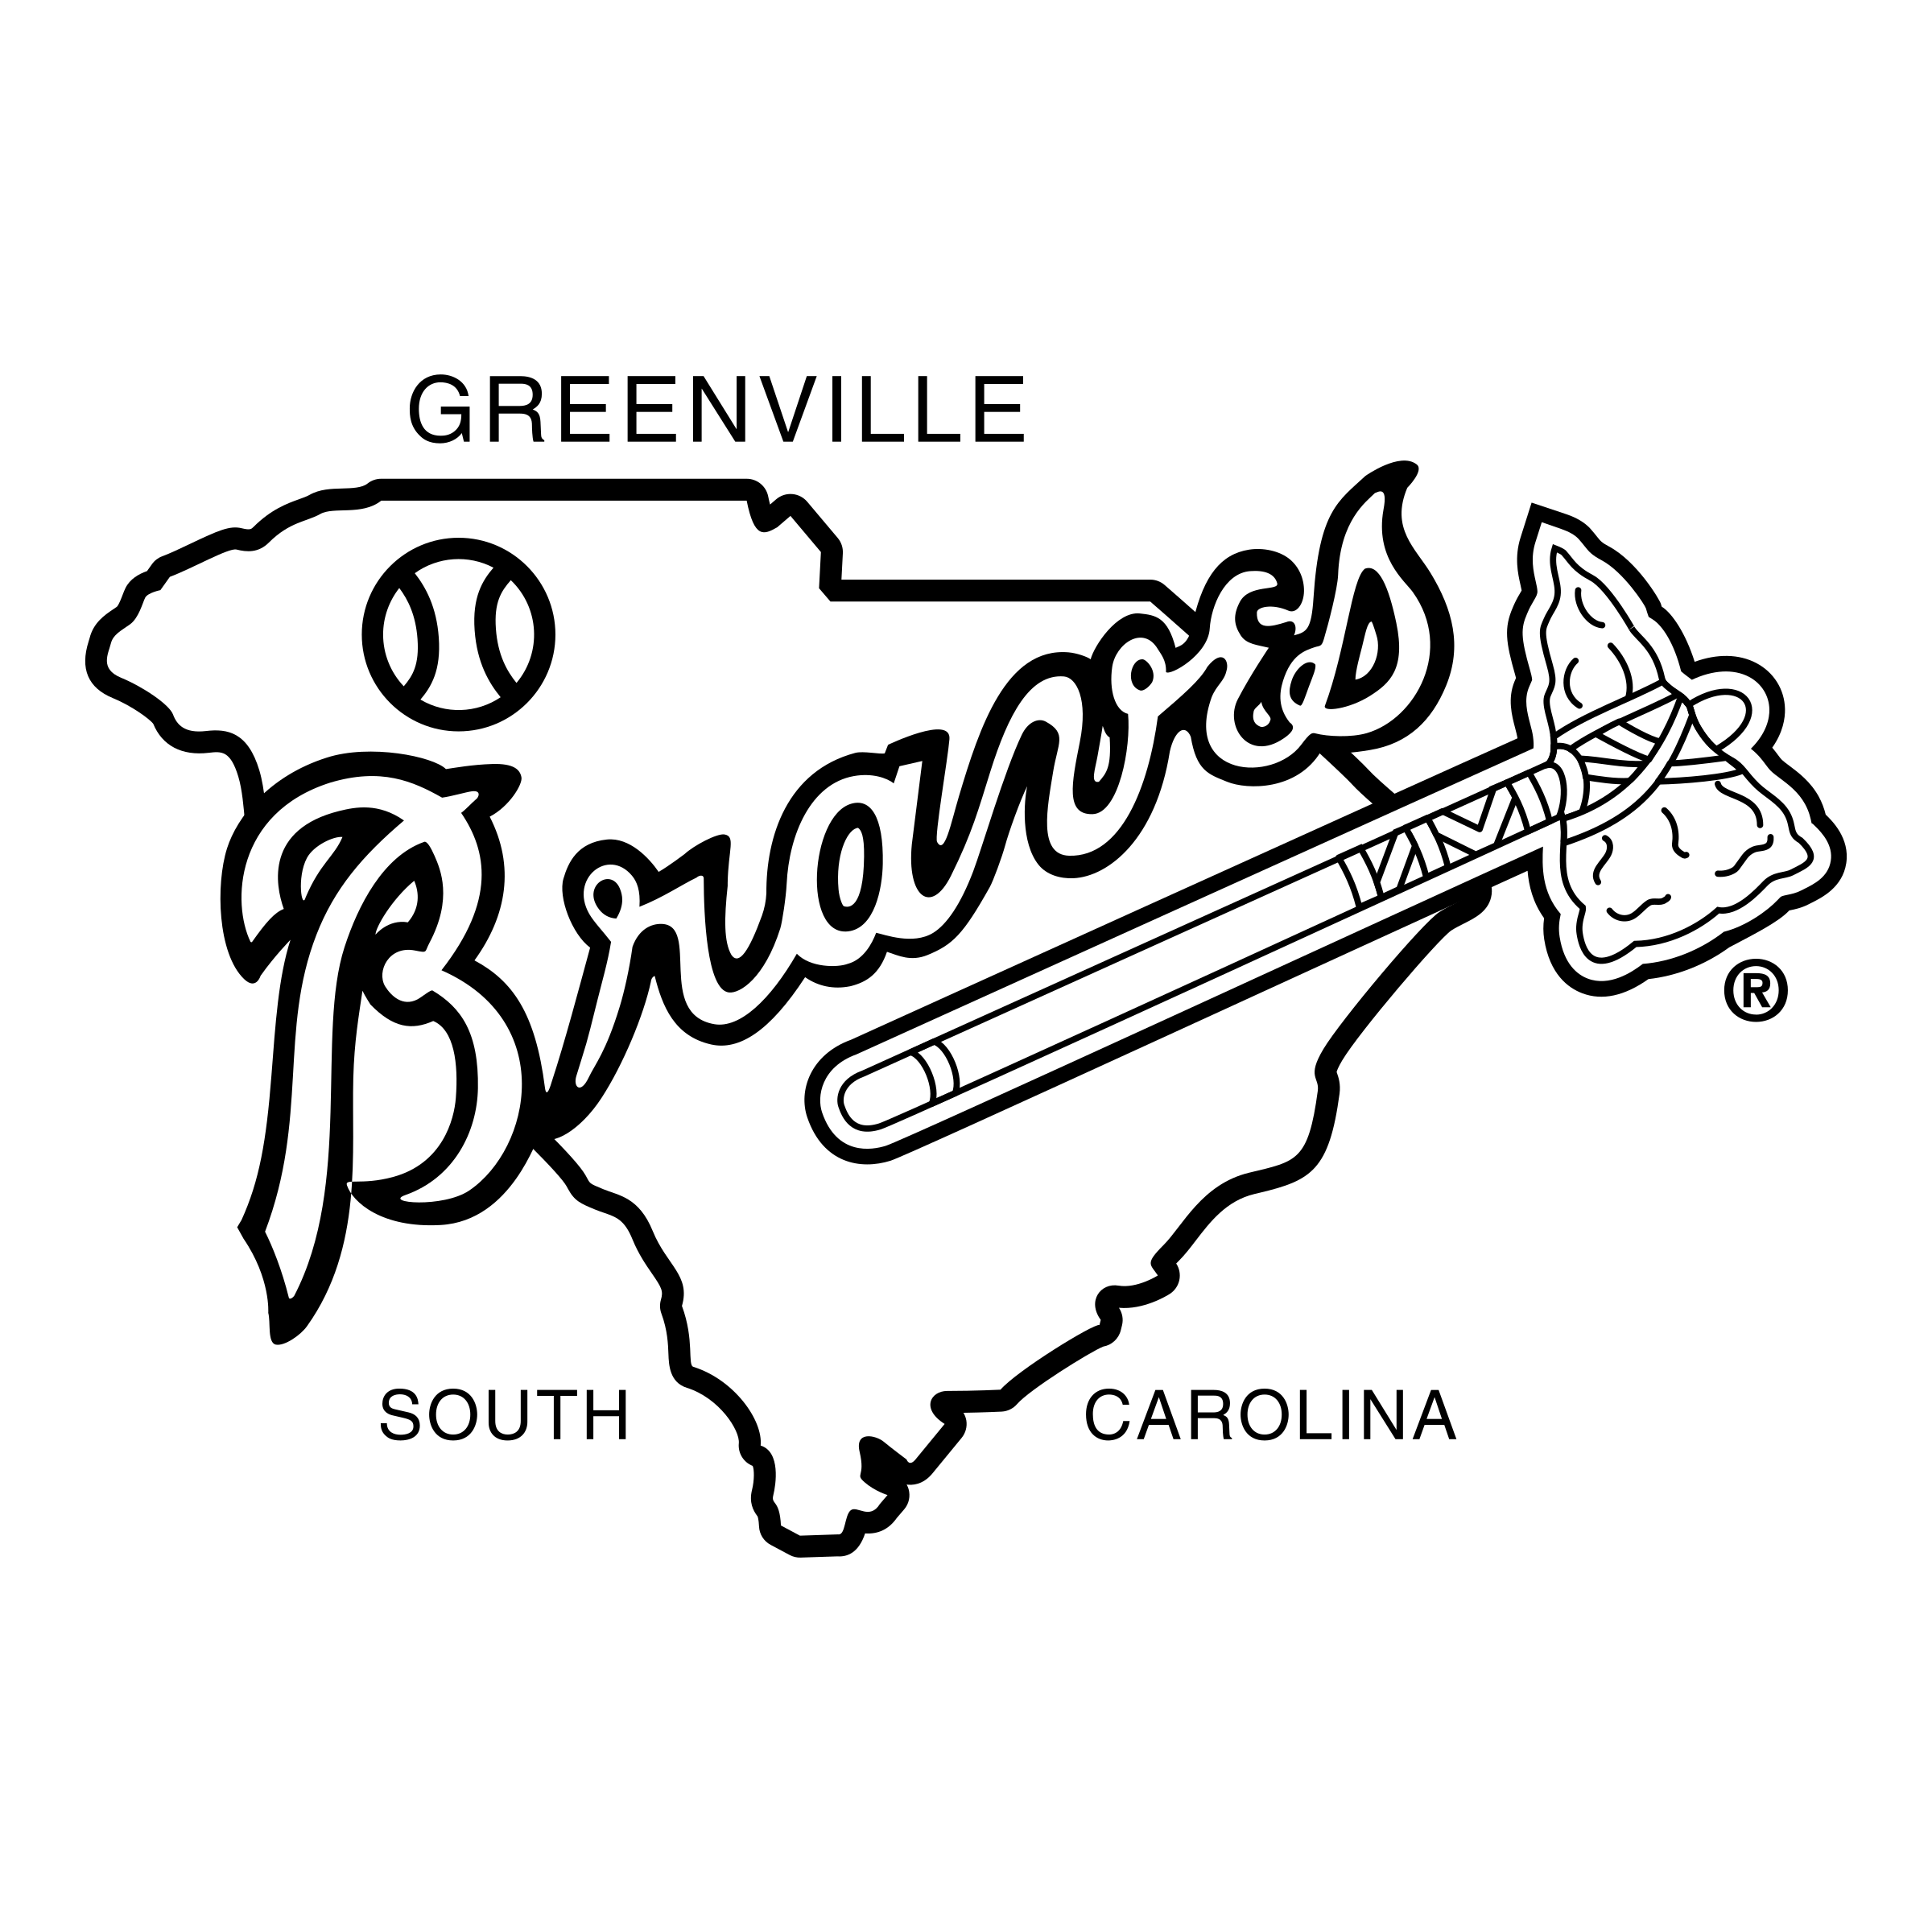 Braves Logo Transparante Afbeeldingen